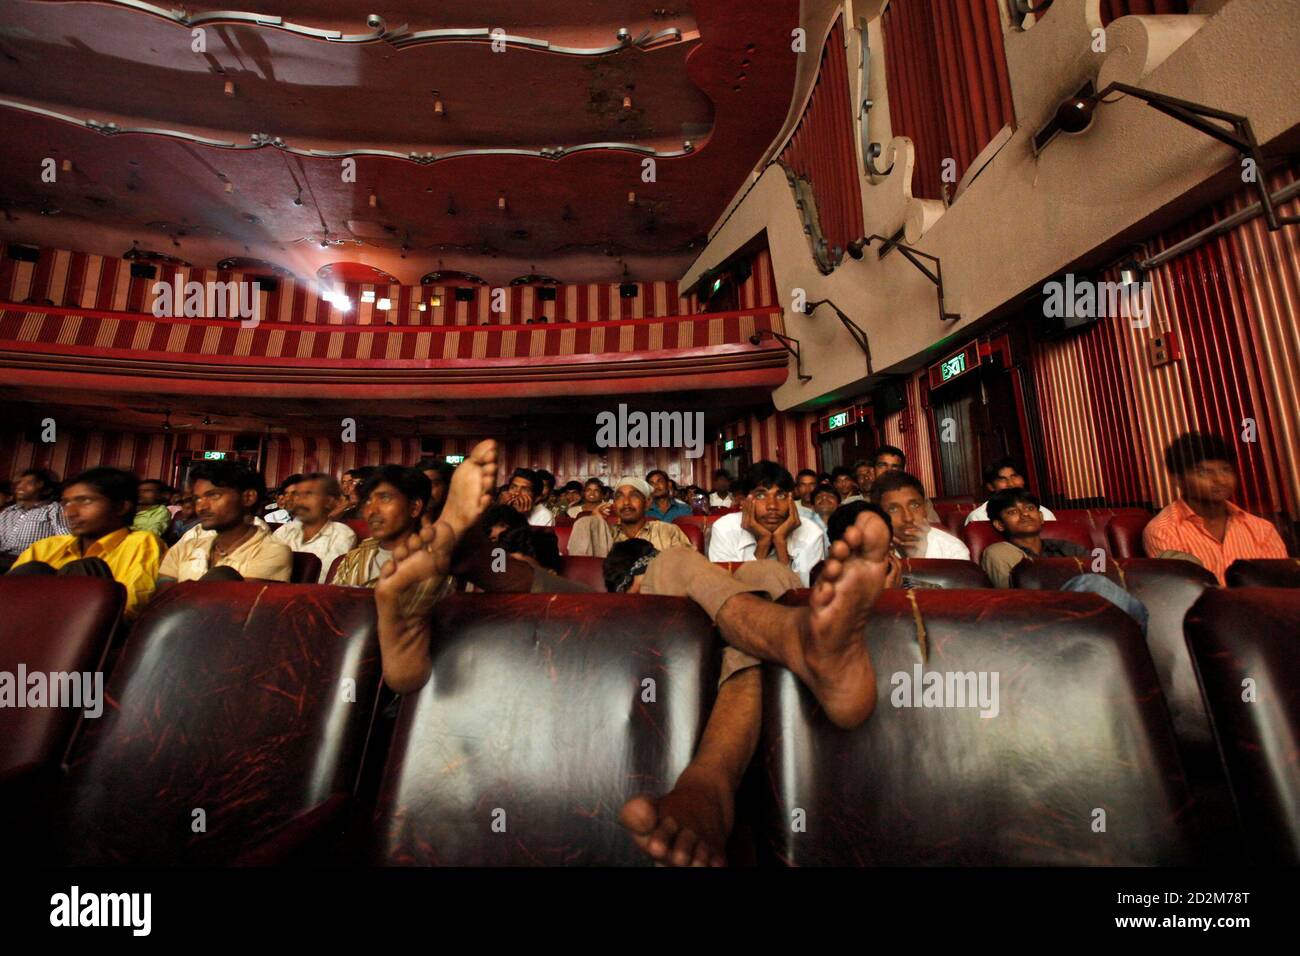 ddlj movie theater in mumbai